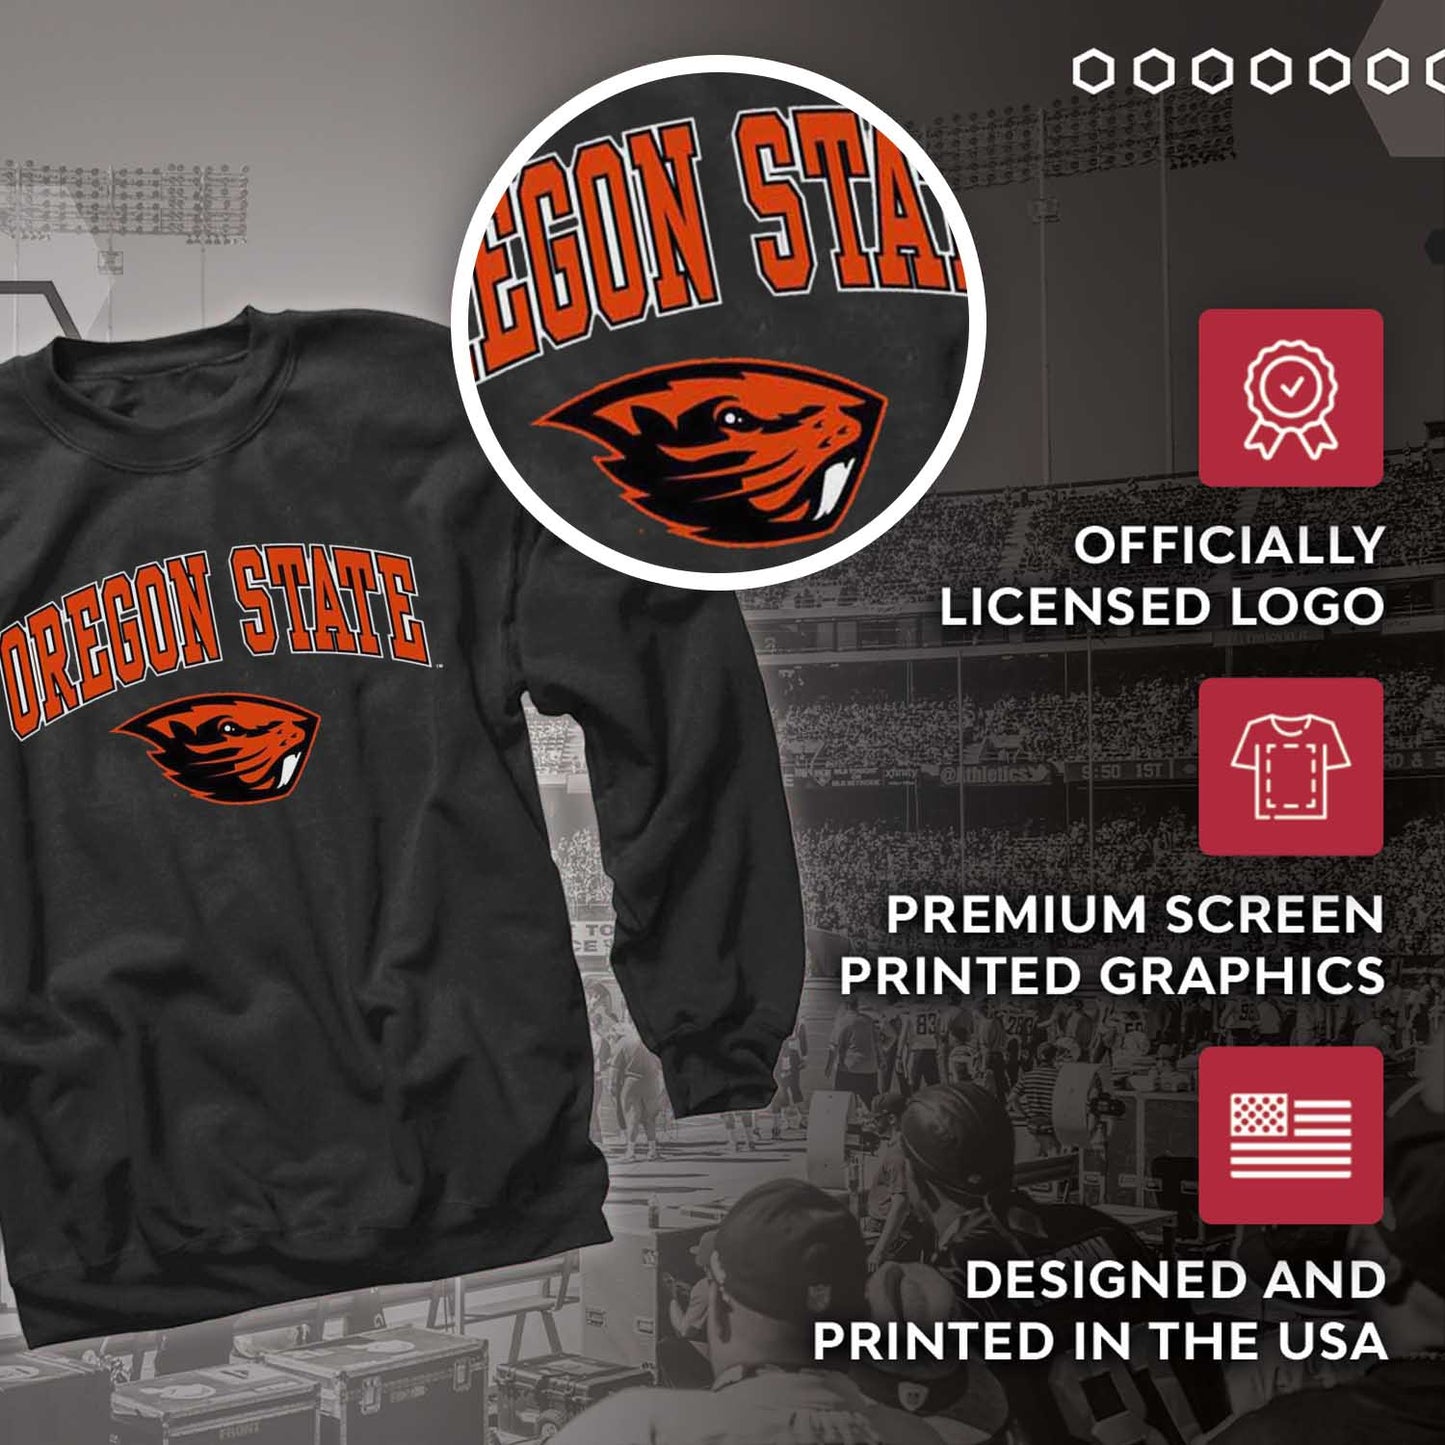 Oregon State Beavers Adult Arch & Logo Soft Style Gameday Crewneck Sweatshirt - Black